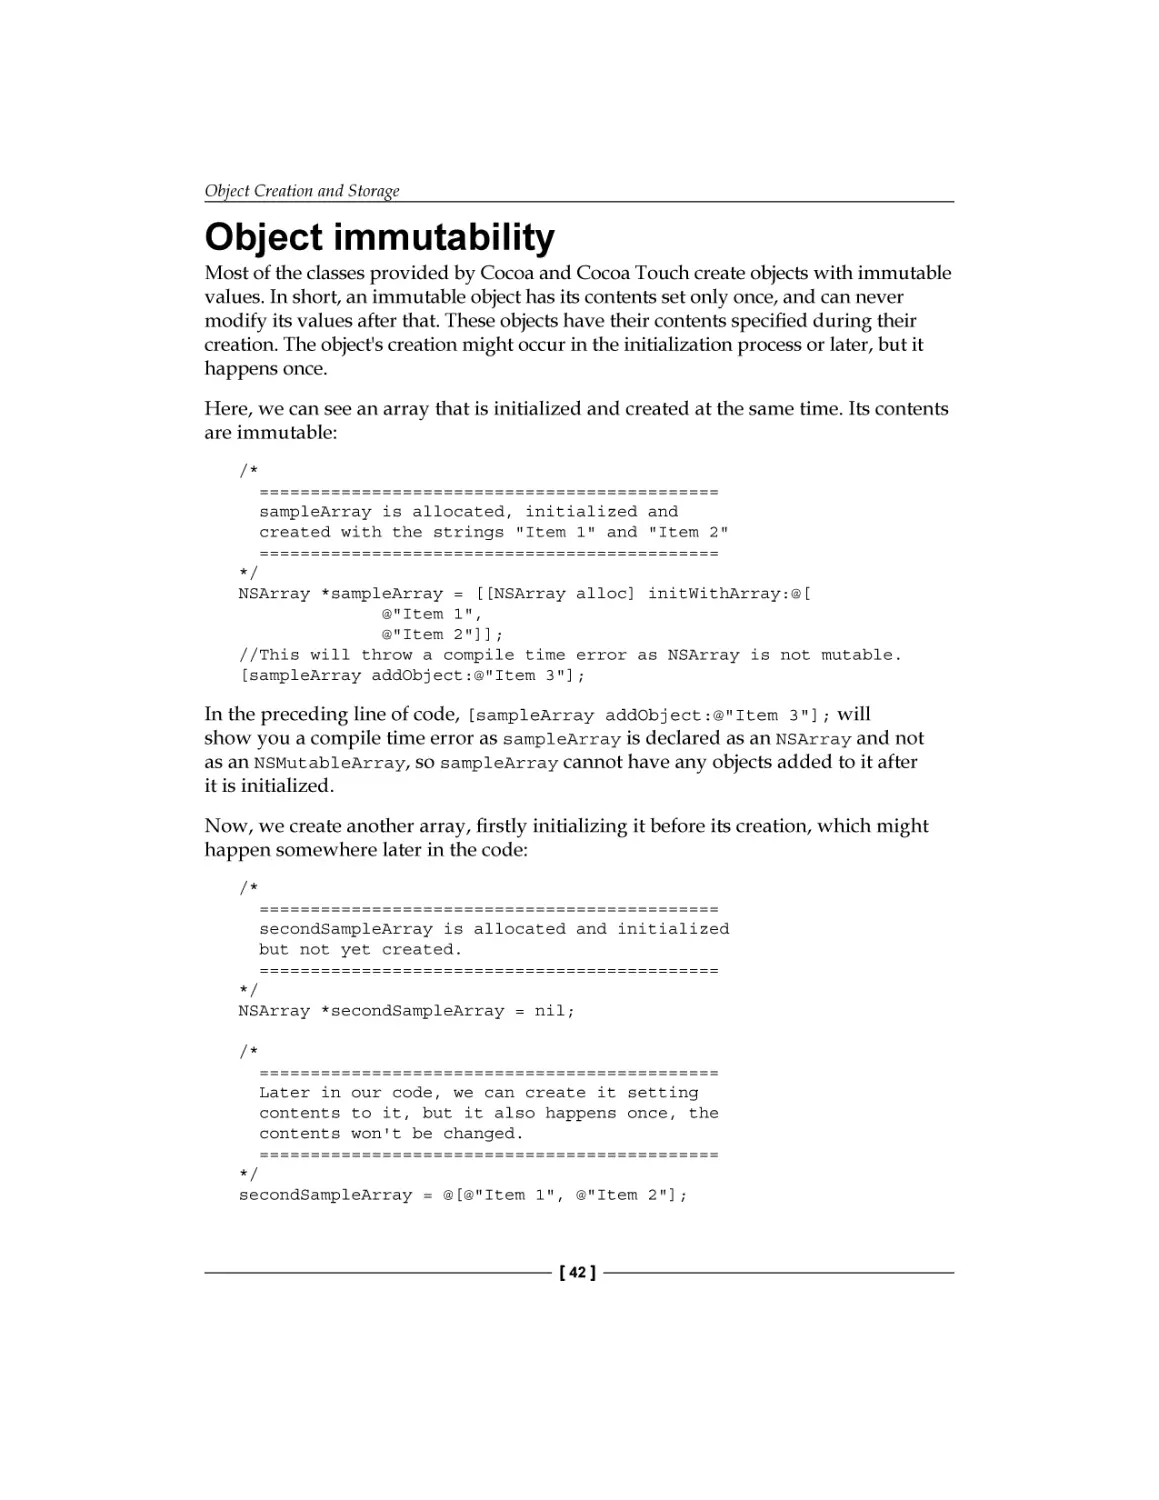 Object immutability